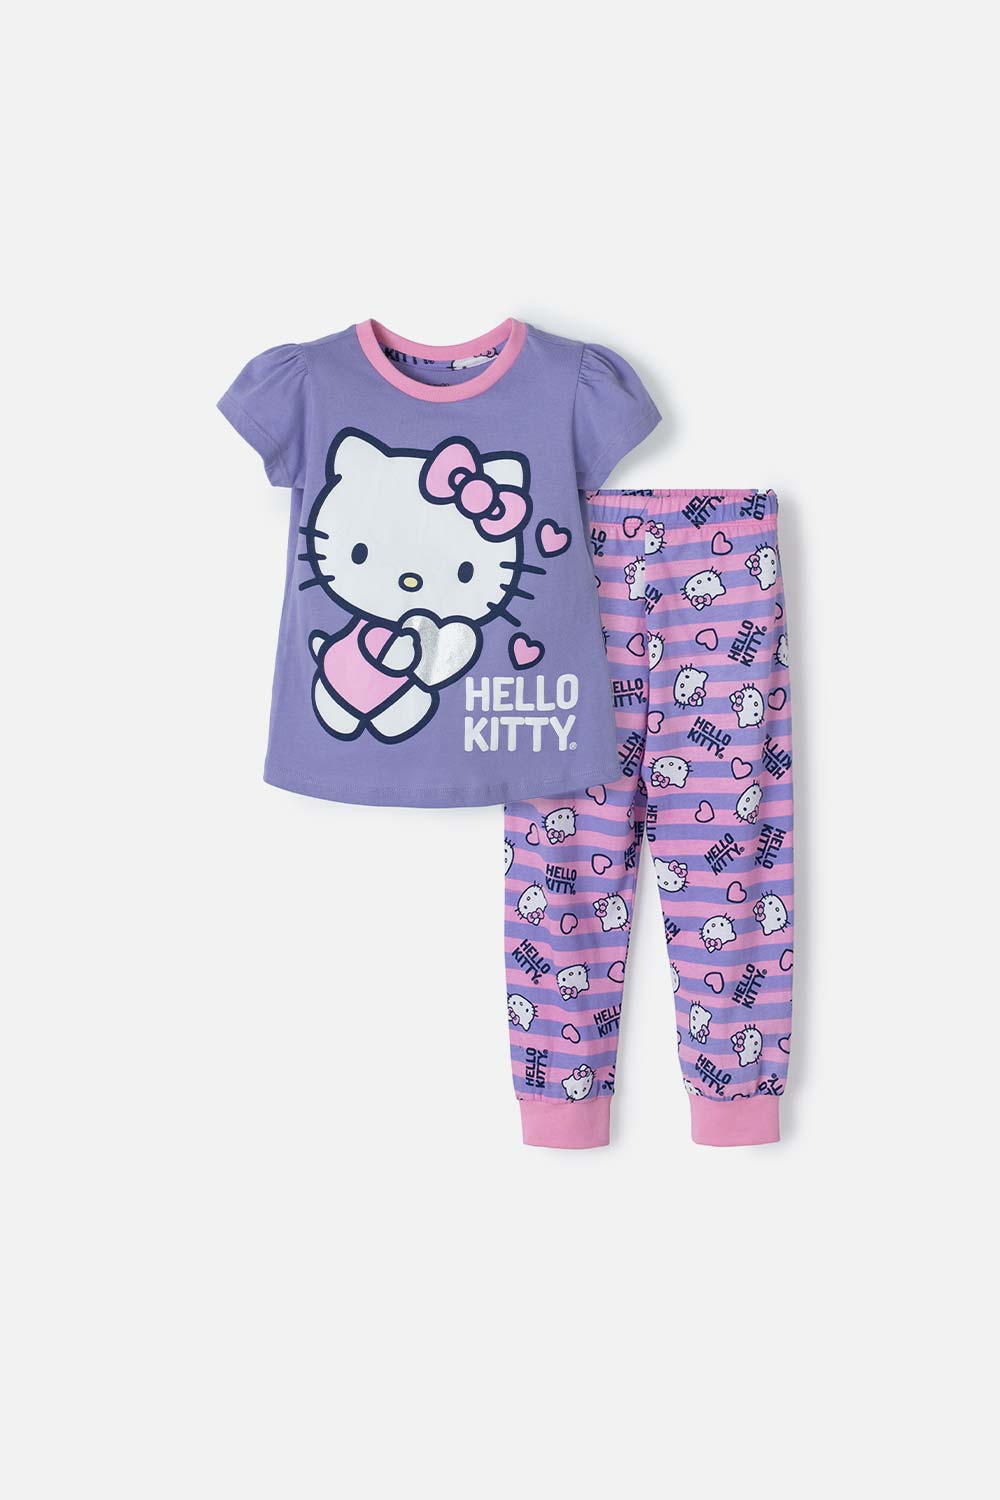 Pijama de Hello Kitty con pantalón largo morado y rosado para niña 2T a 5T 2T-0